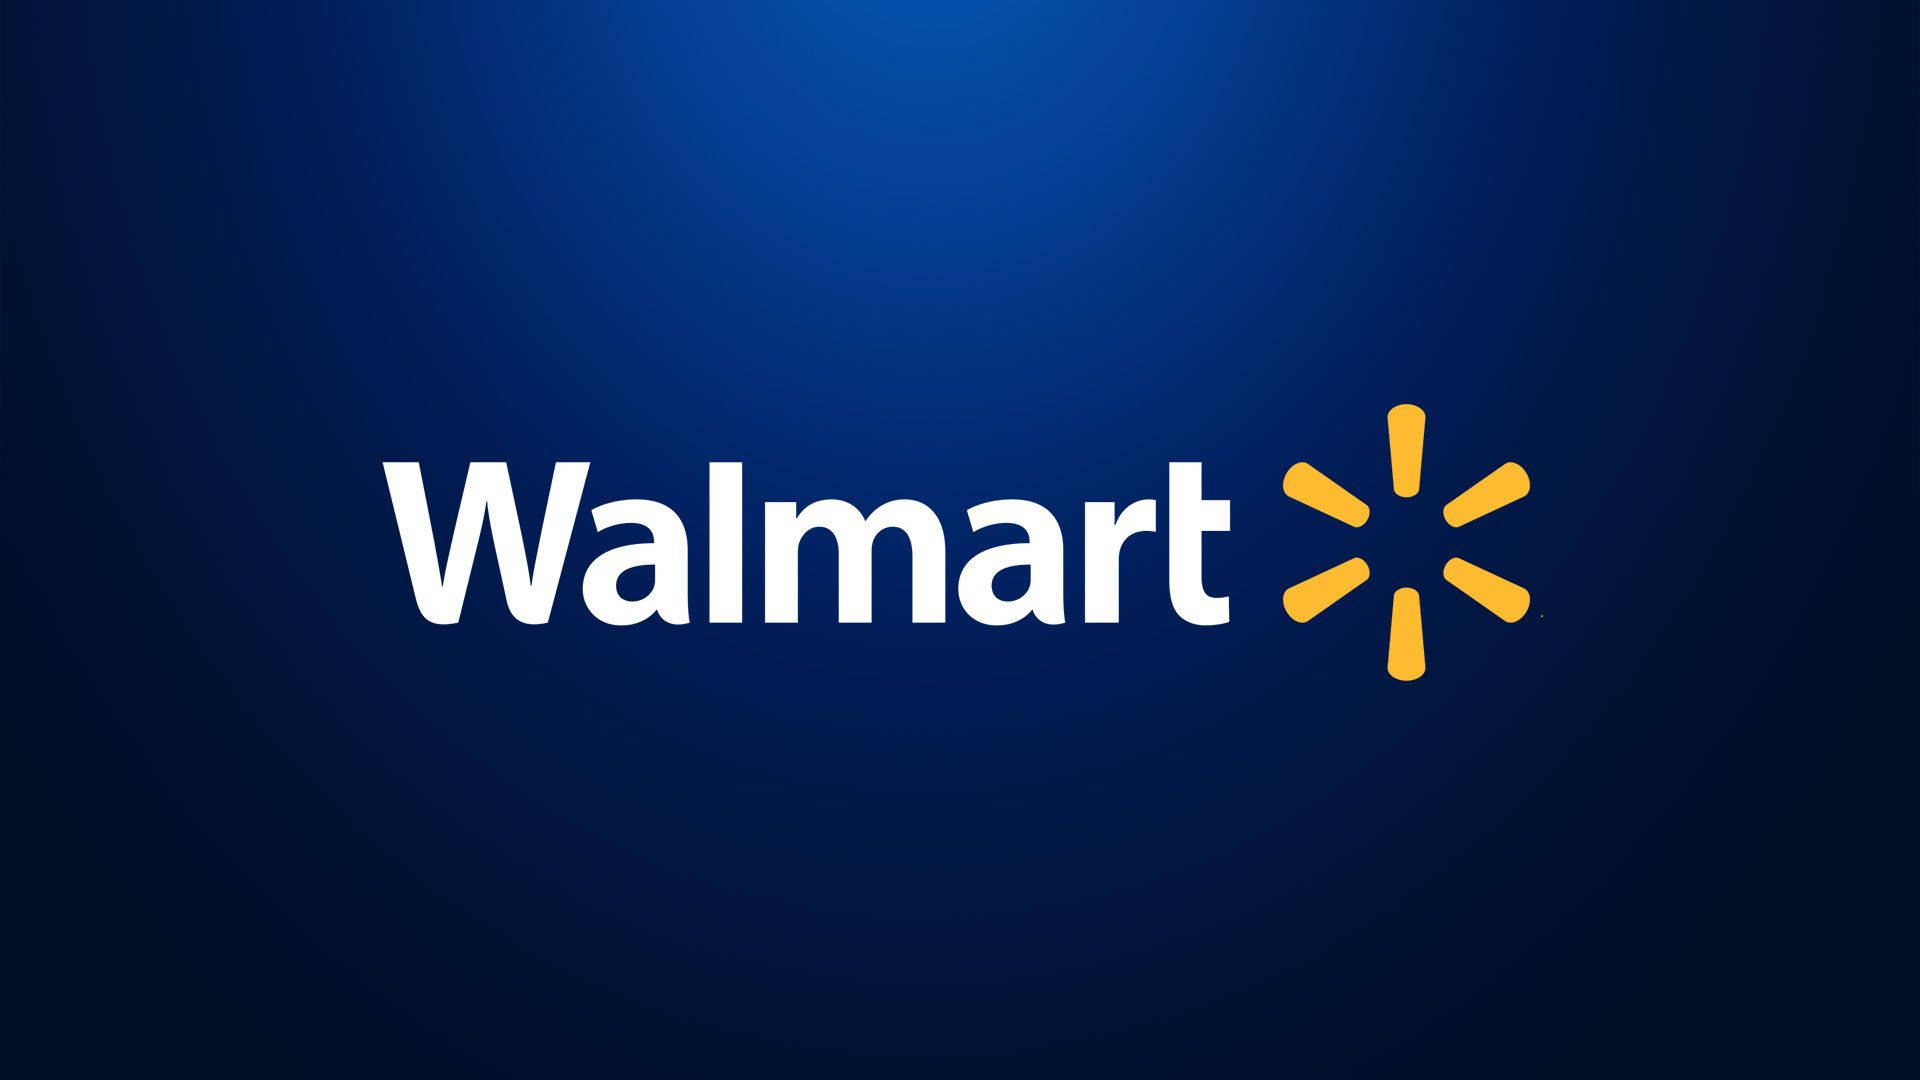 Walmart navy blue logo wallpaper 